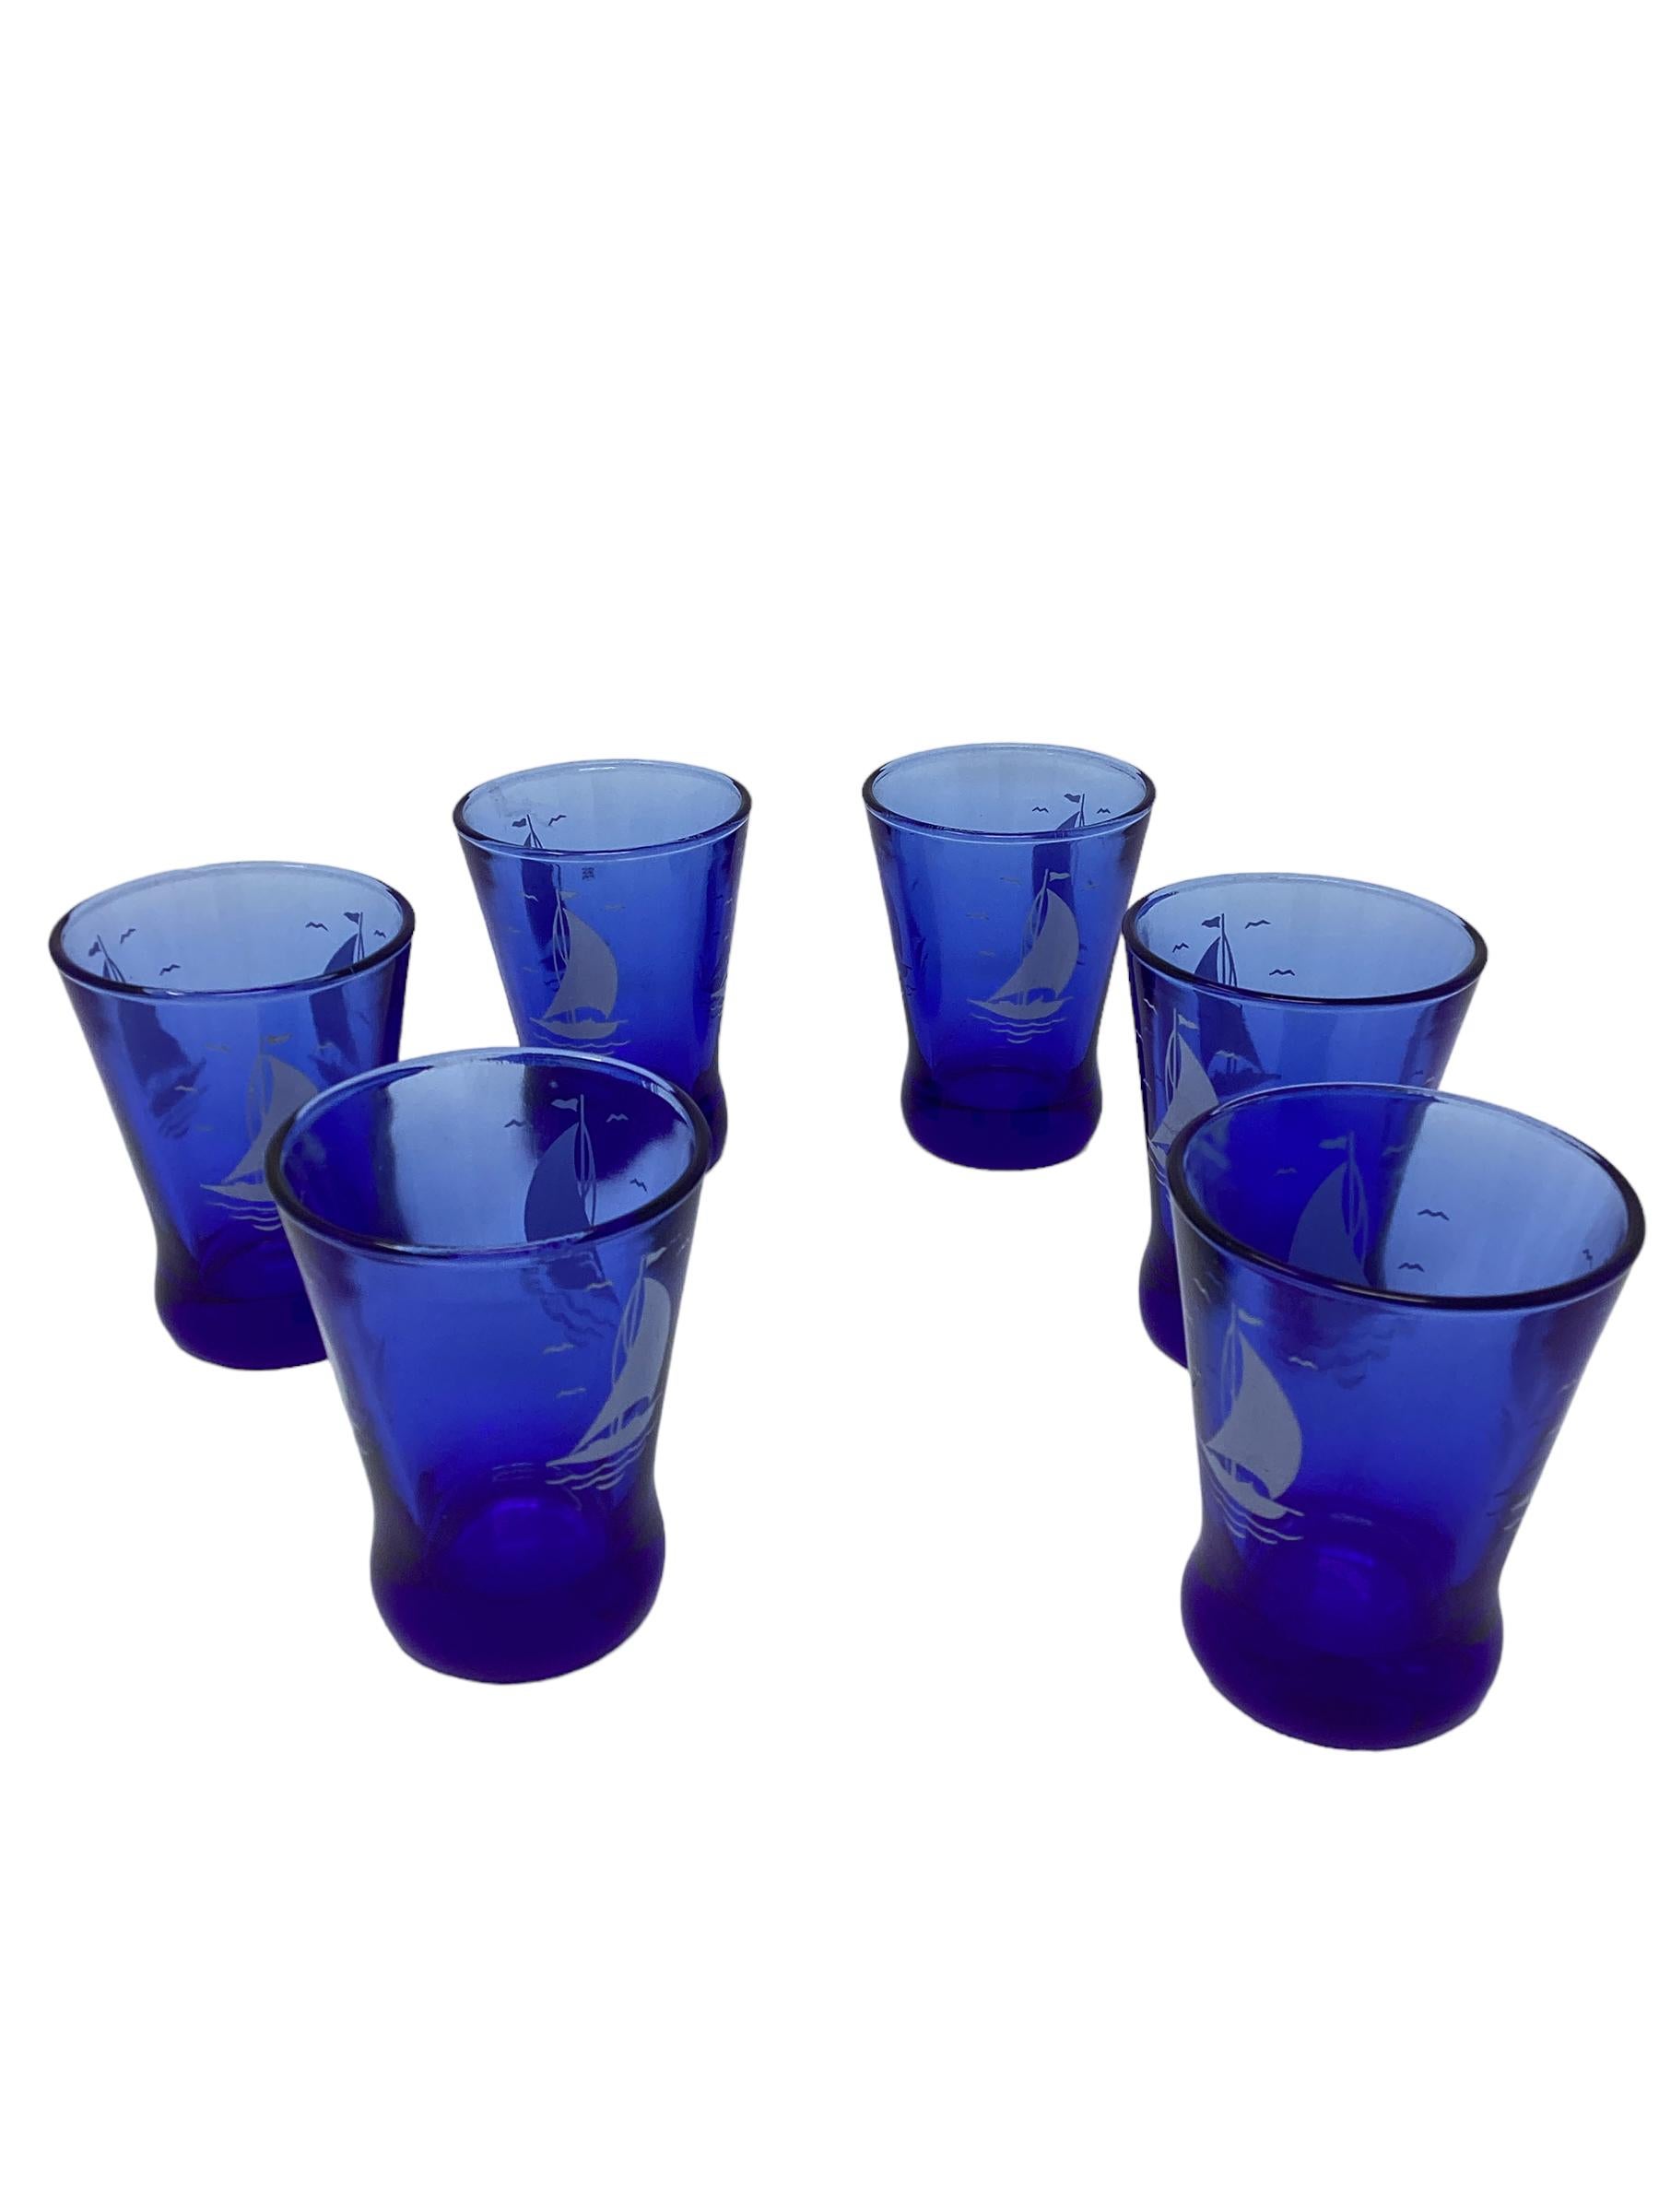 Hazel-Atlas Sportsman Series Cobalt Blue with White Sailboat Cocktail Set. The cocktail cups measure 2.5